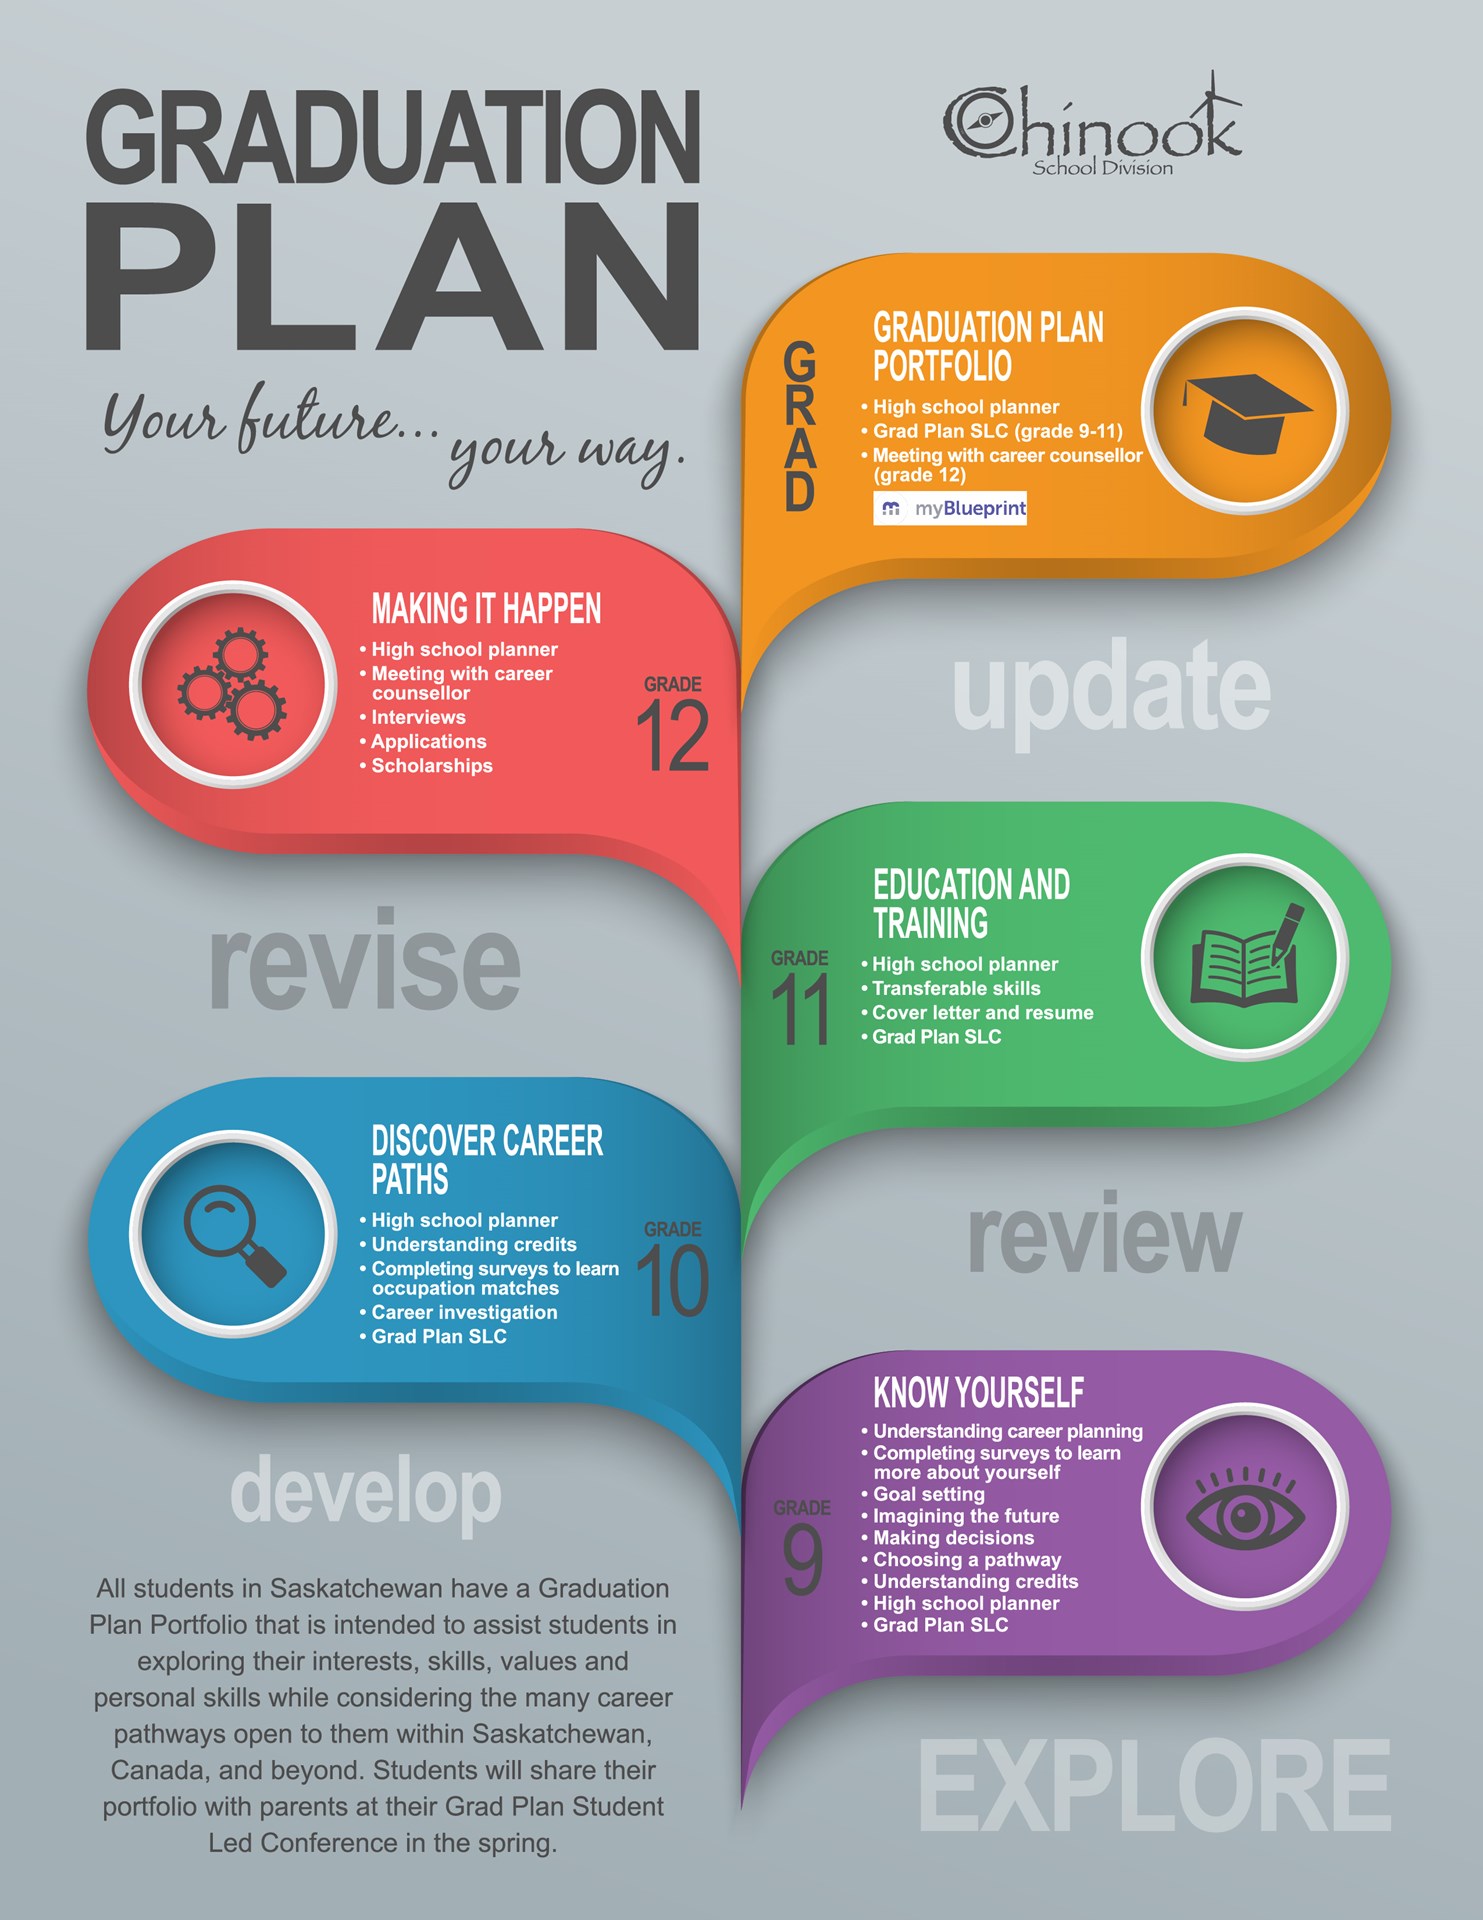 Graduation Plan - Infographic.jpg